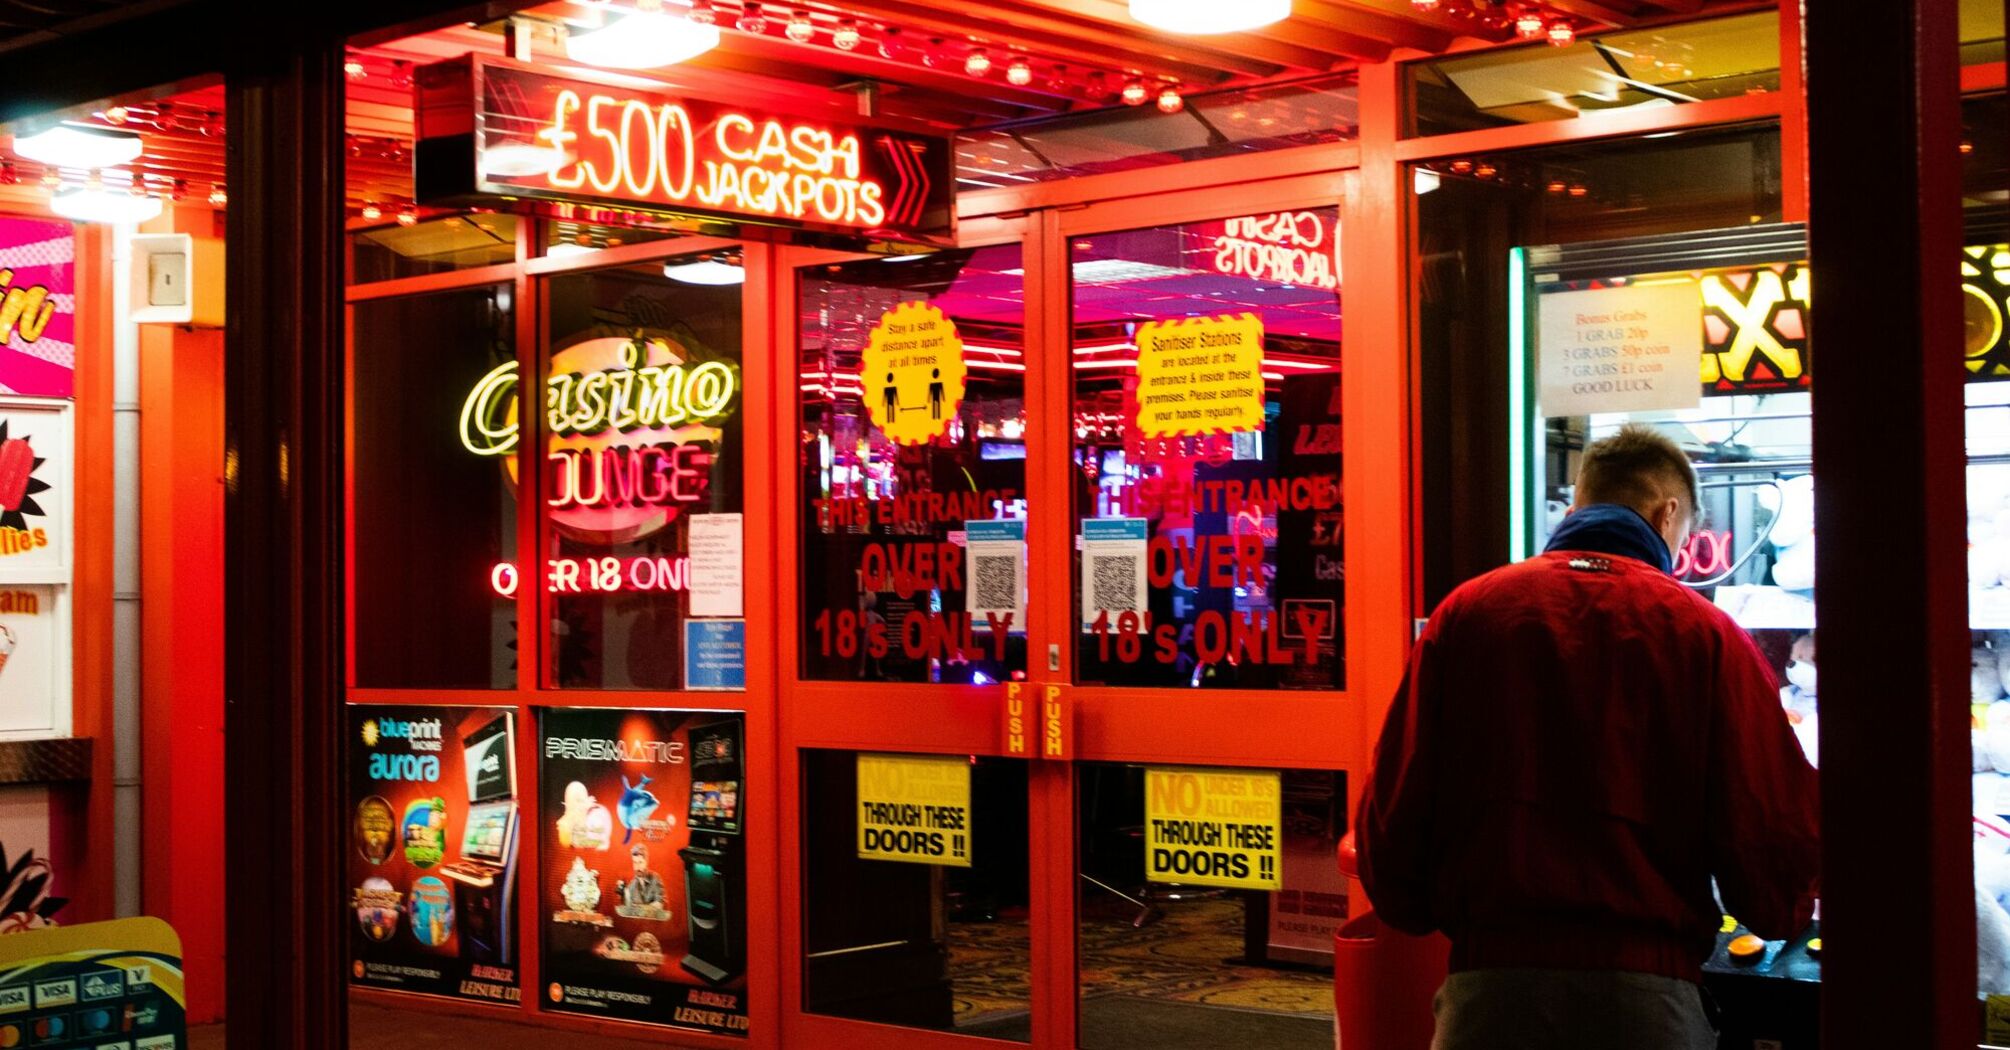 Man in red shirt standing near casino